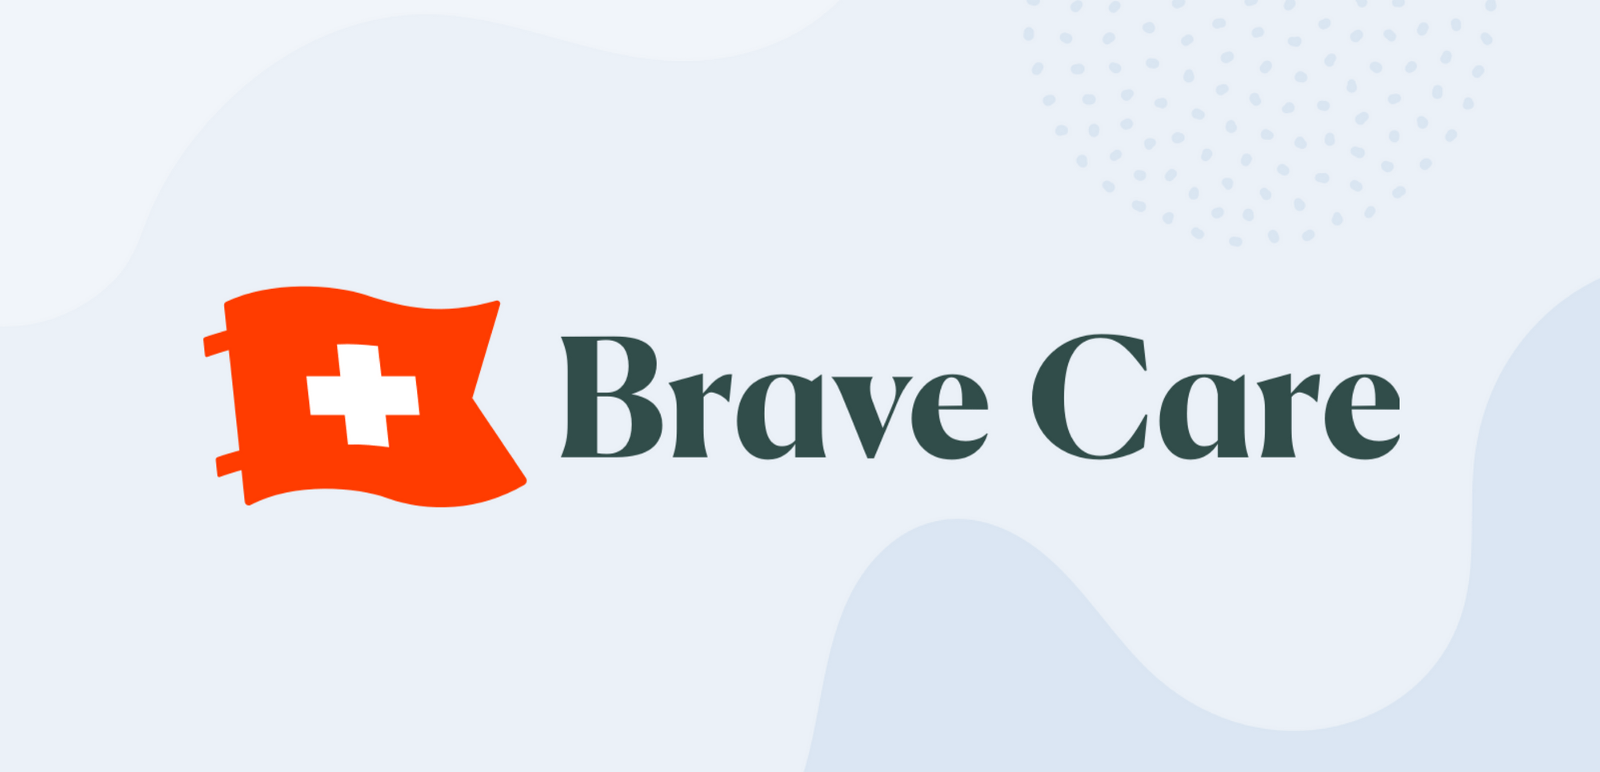 Brave Care